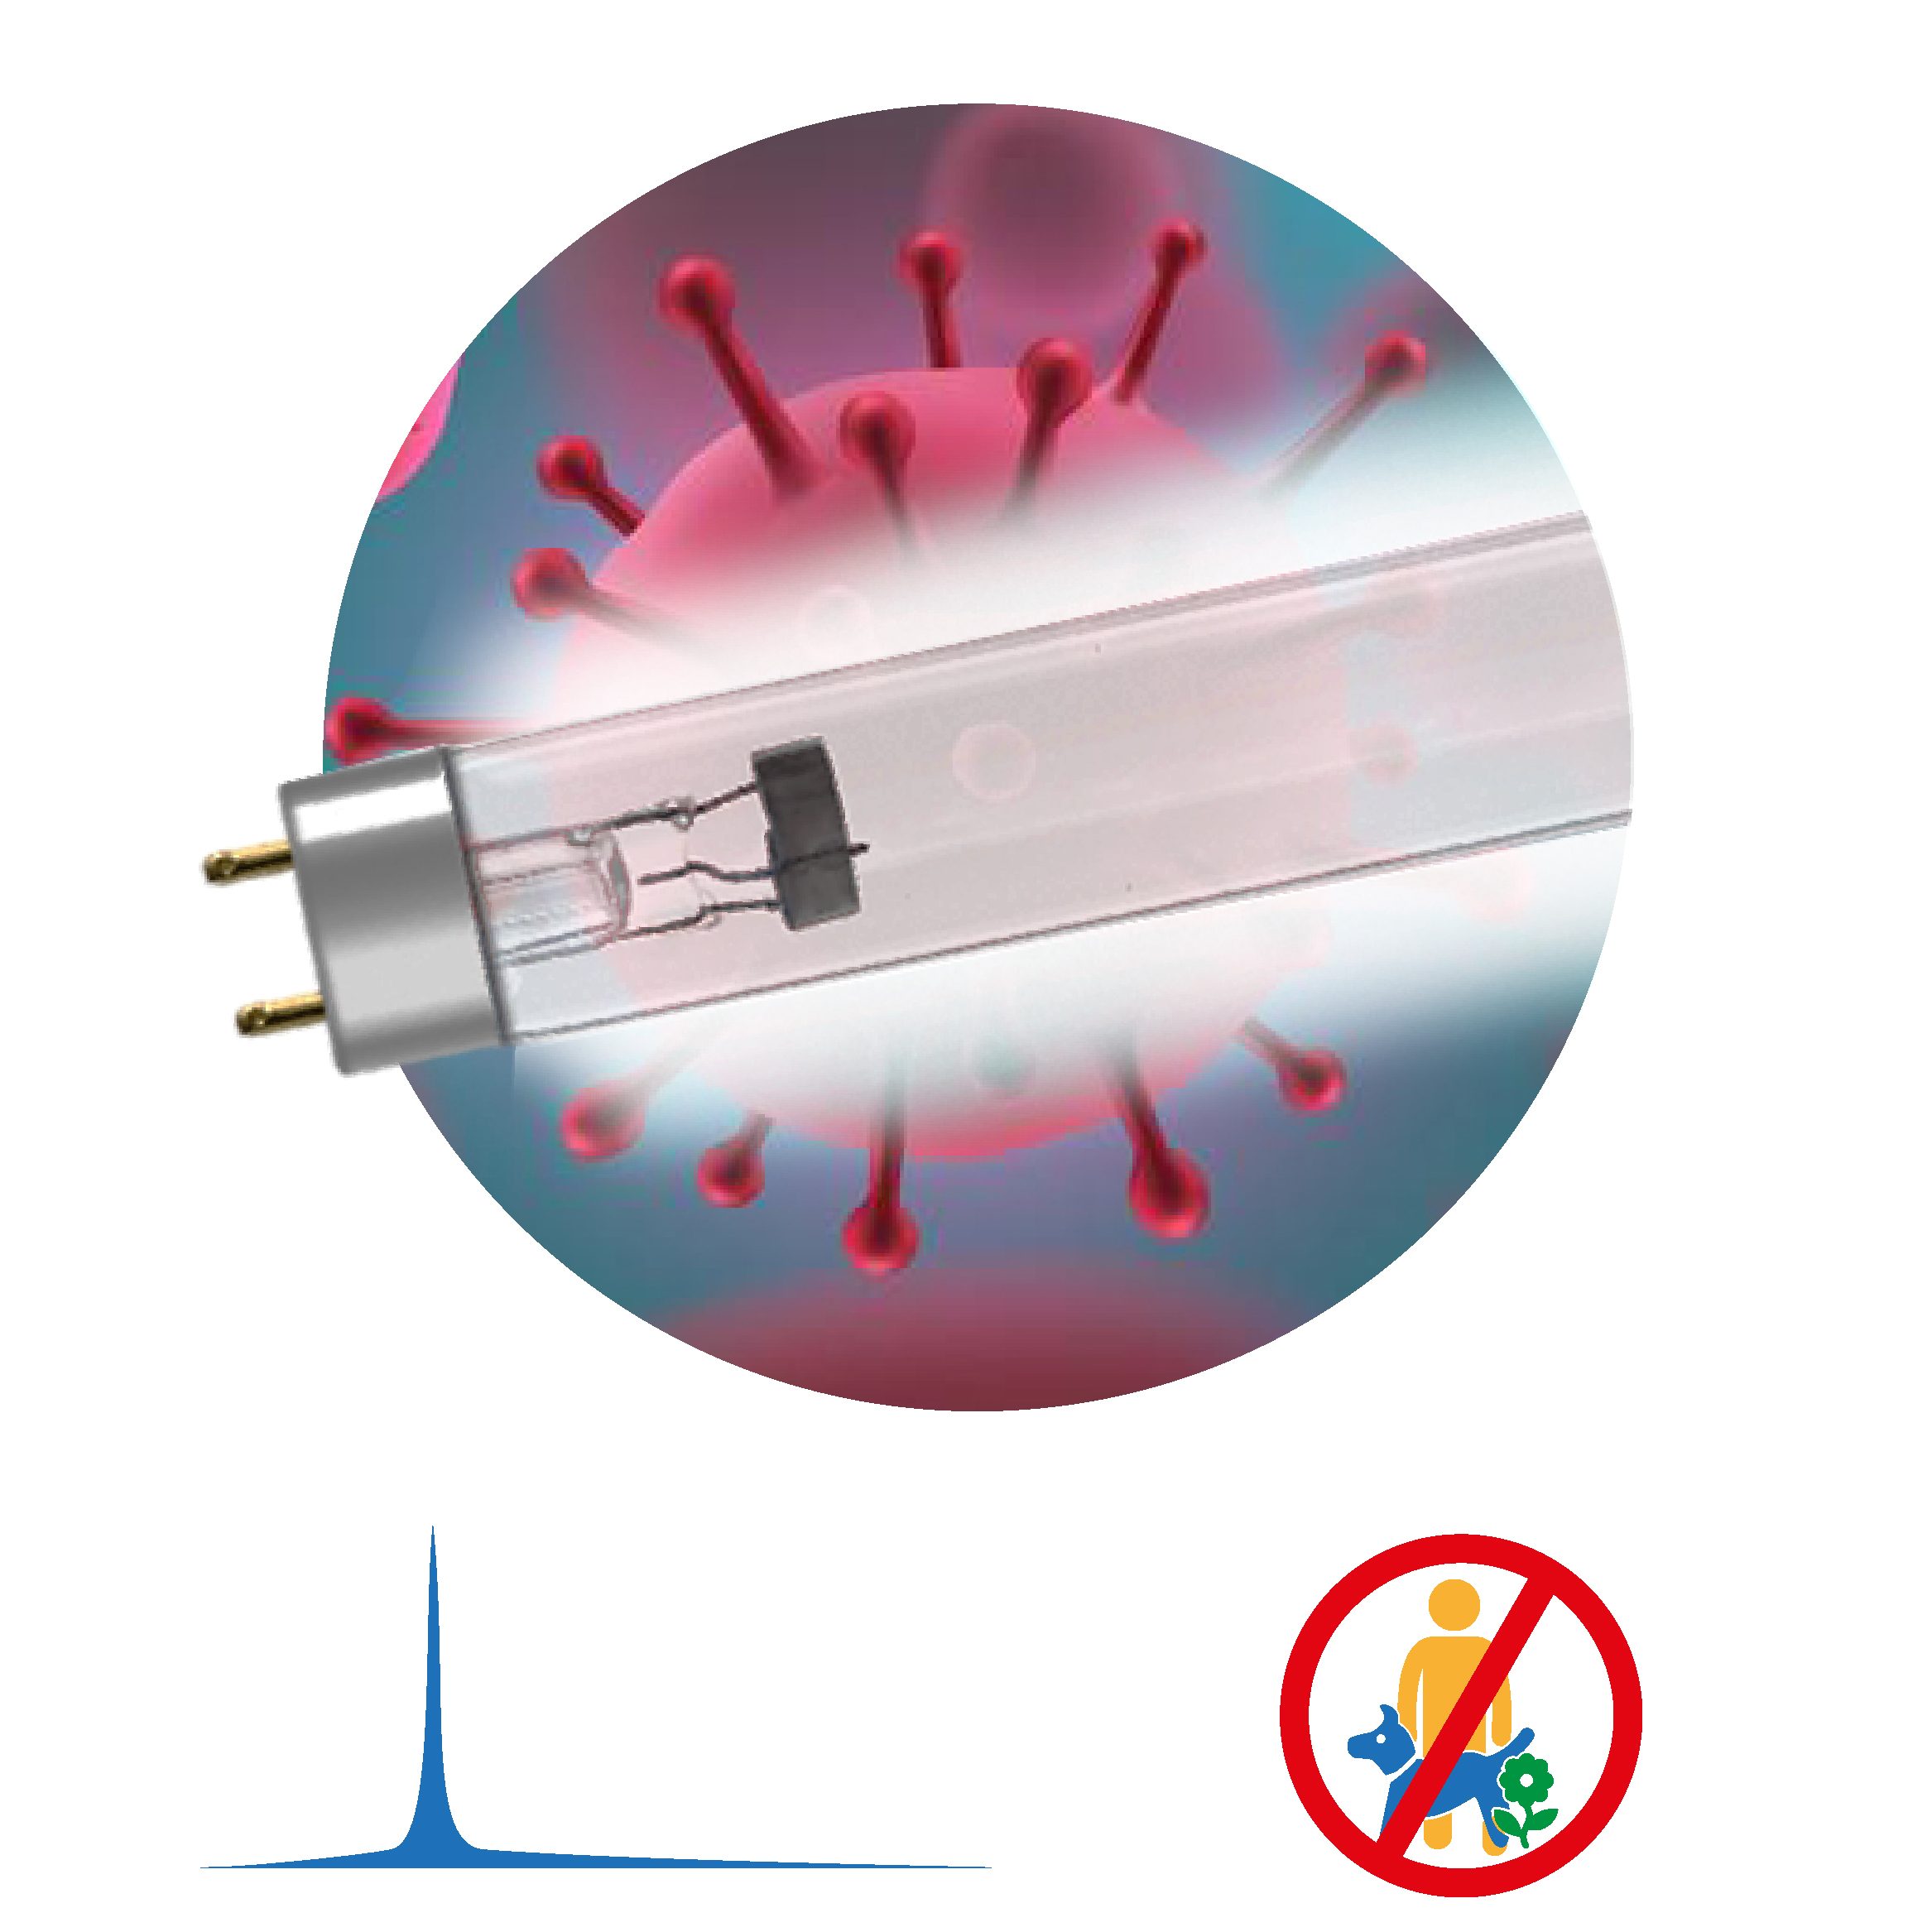 UV-С ДБ 30 Т8 G13 ЭРА Бактерицидная ультрафиолетовая лампа T8/30W (25/700)